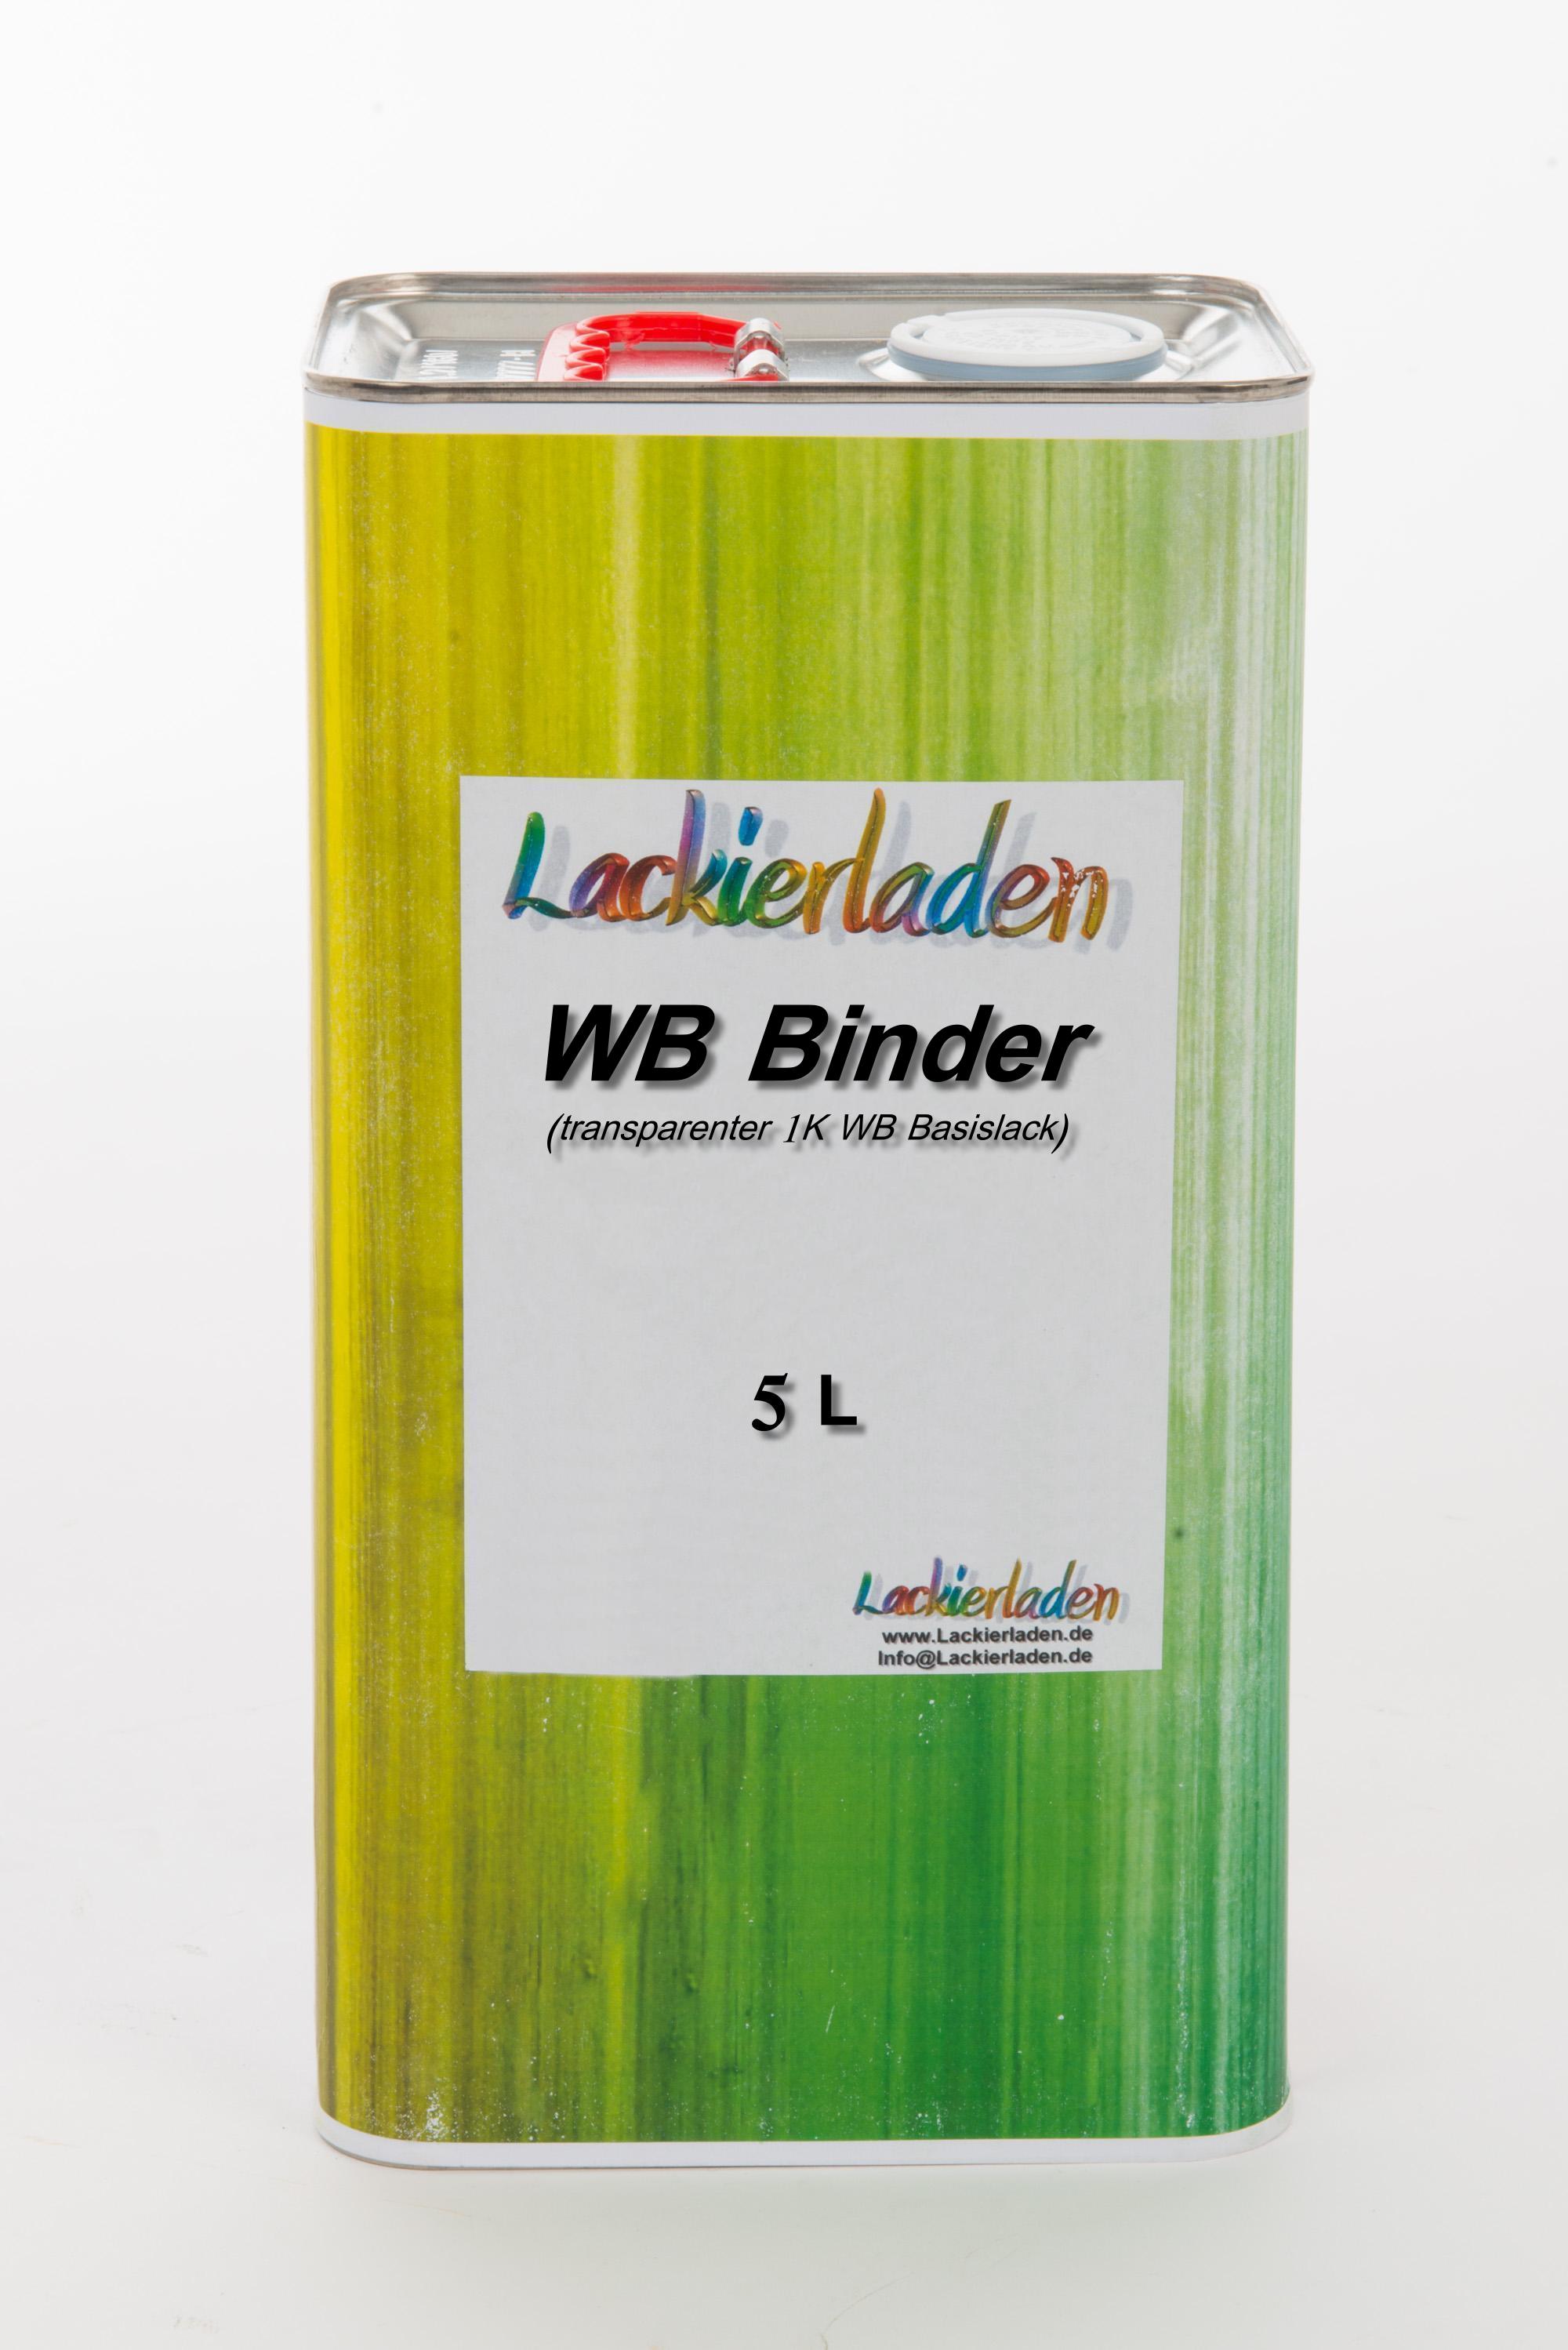 WB Binder (transparenter 1K WB Basislack) 5,0 L | wasserbasis Lackzusatz farblos